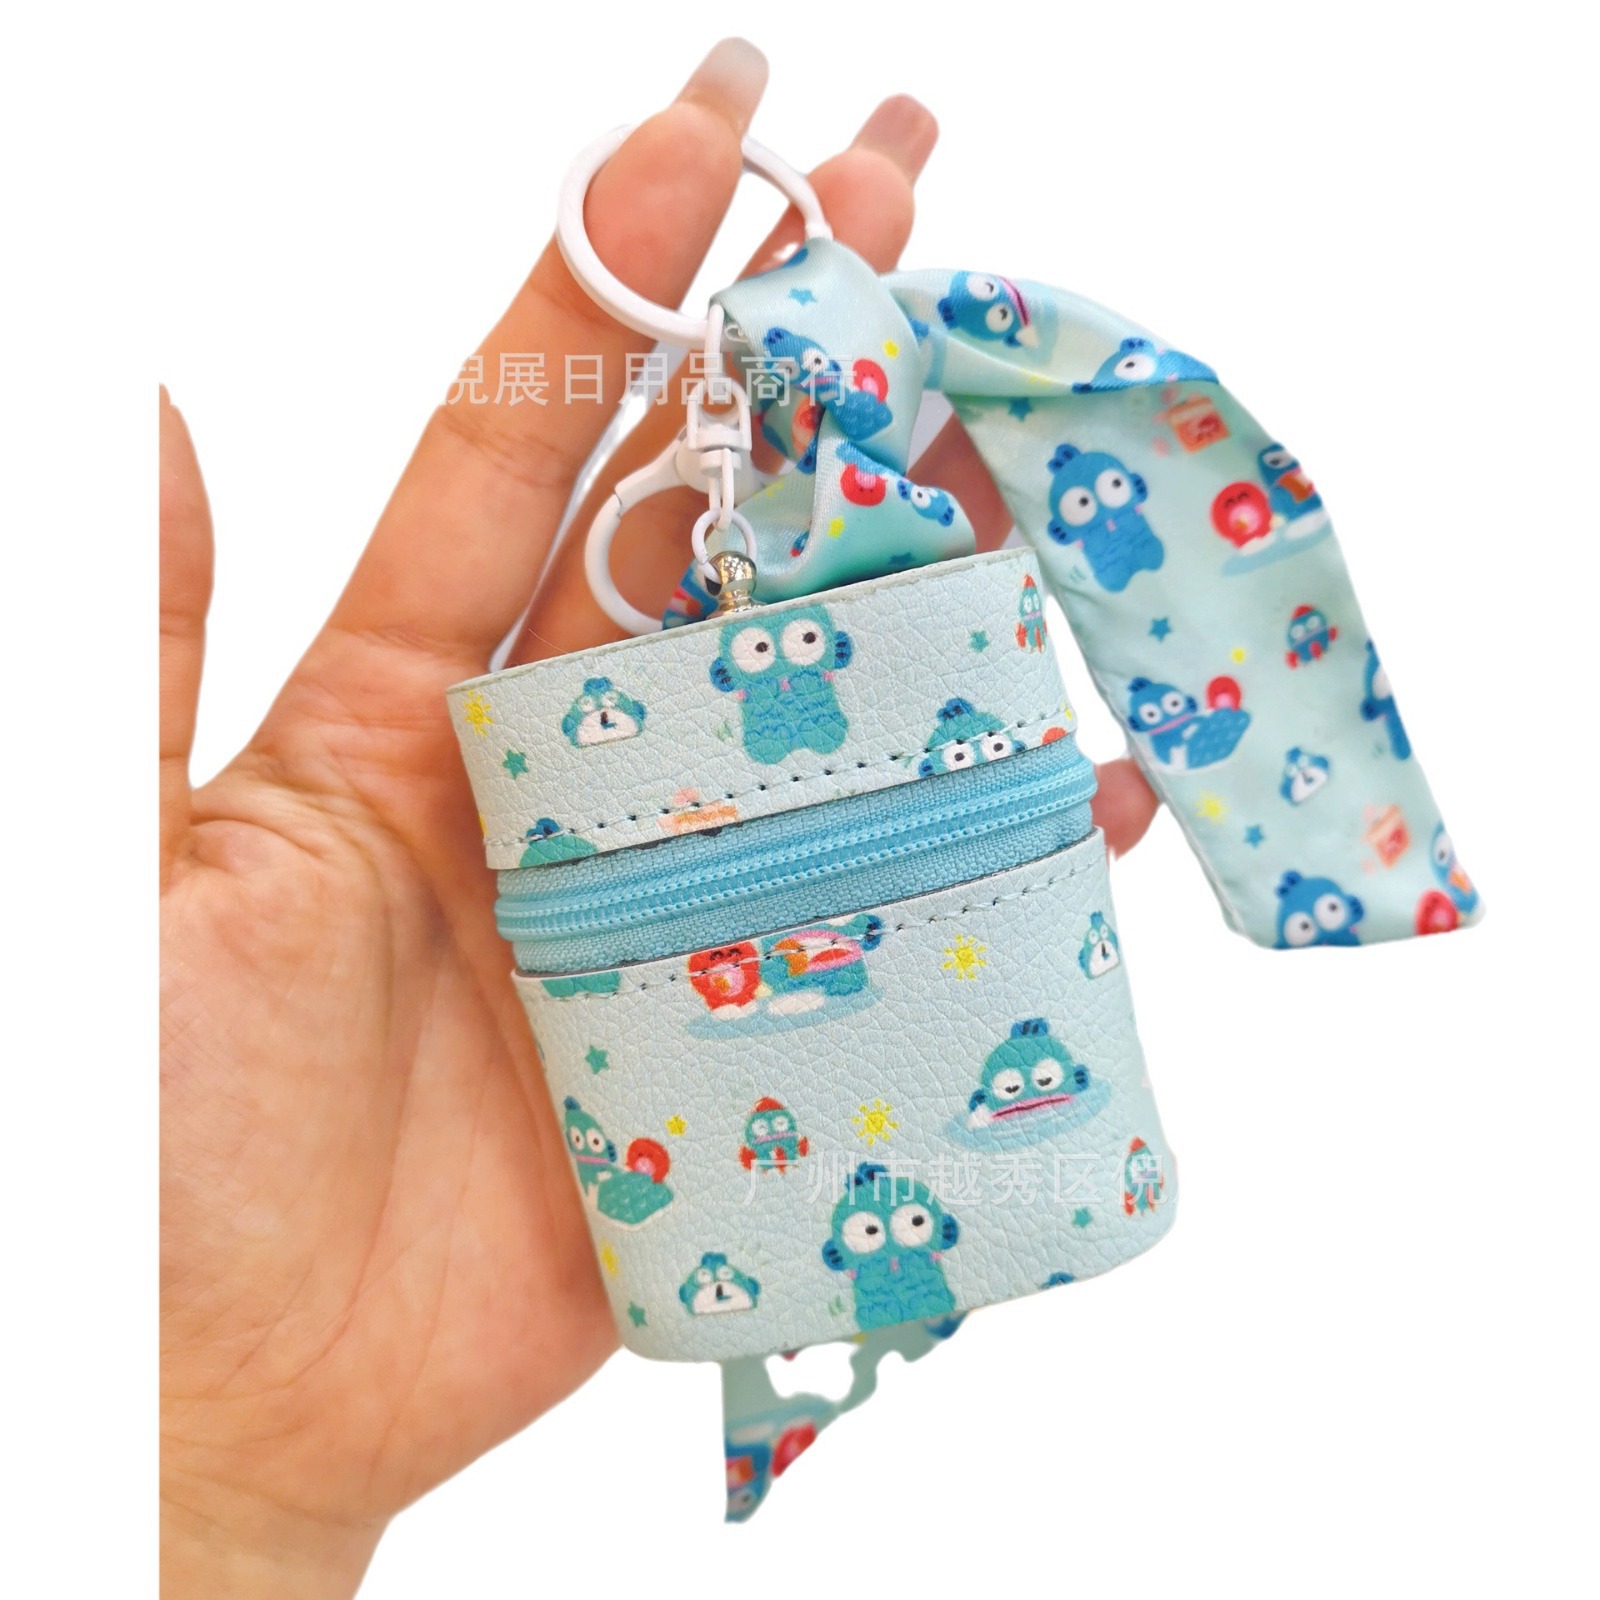 Sanliou Earphone Bag Keychain Mini Bag Portable Lipstick Pack Bluetooth Storage Wireless Headset Protective Case